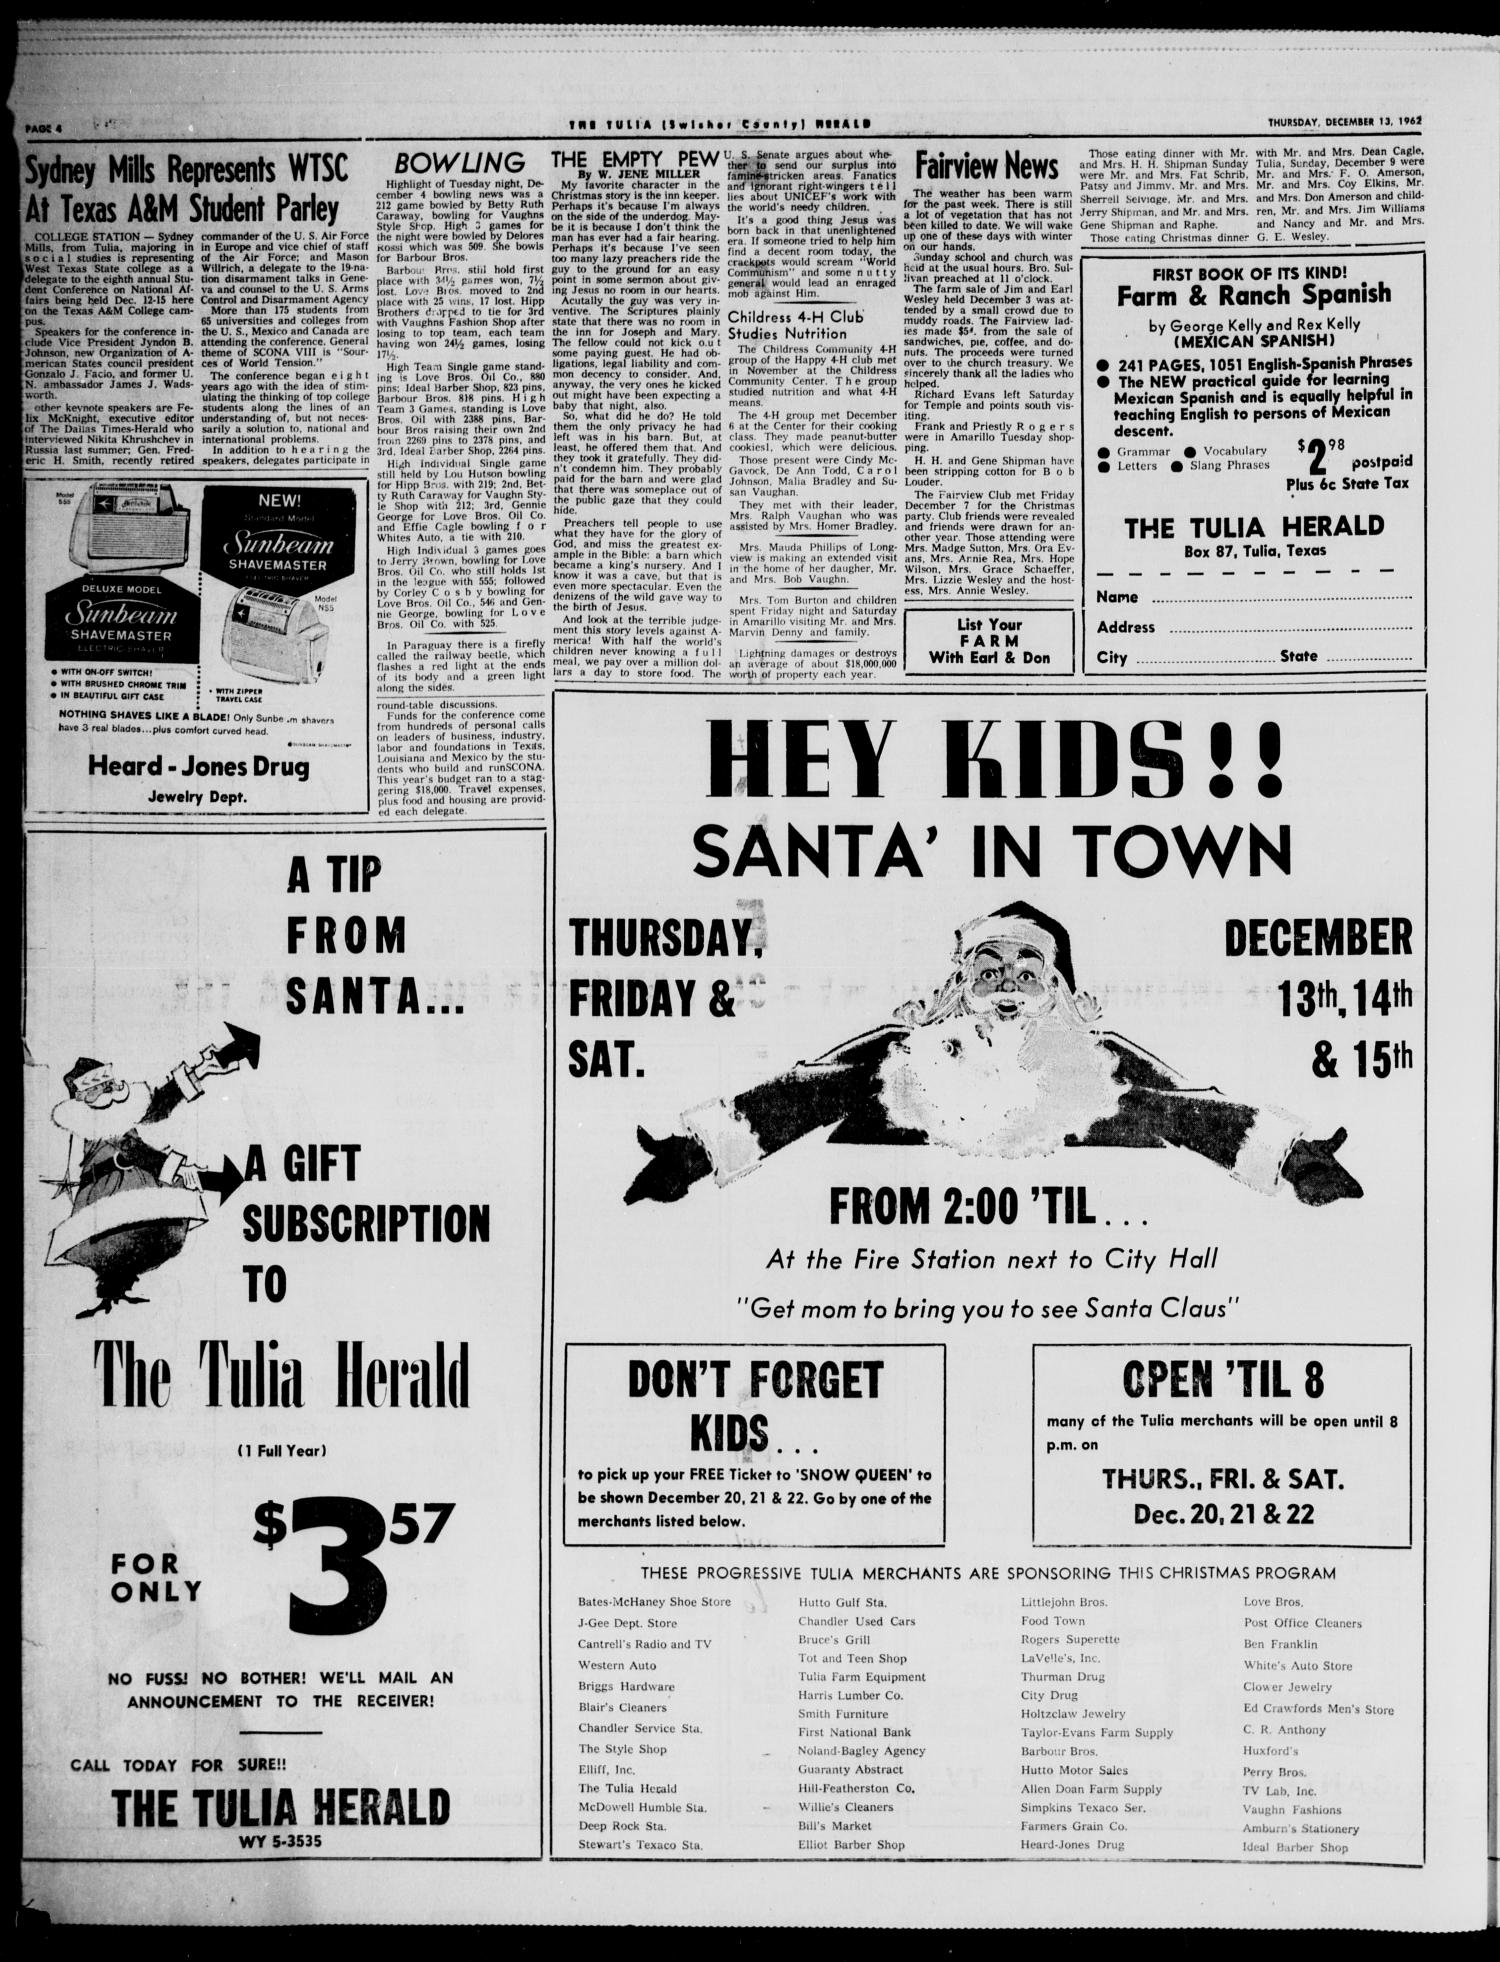 The Tulia Herald (Tulia, Tex), Vol. 54, No. 50, Ed. 1, Thursday, December 13, 1962
                                                
                                                    4
                                                